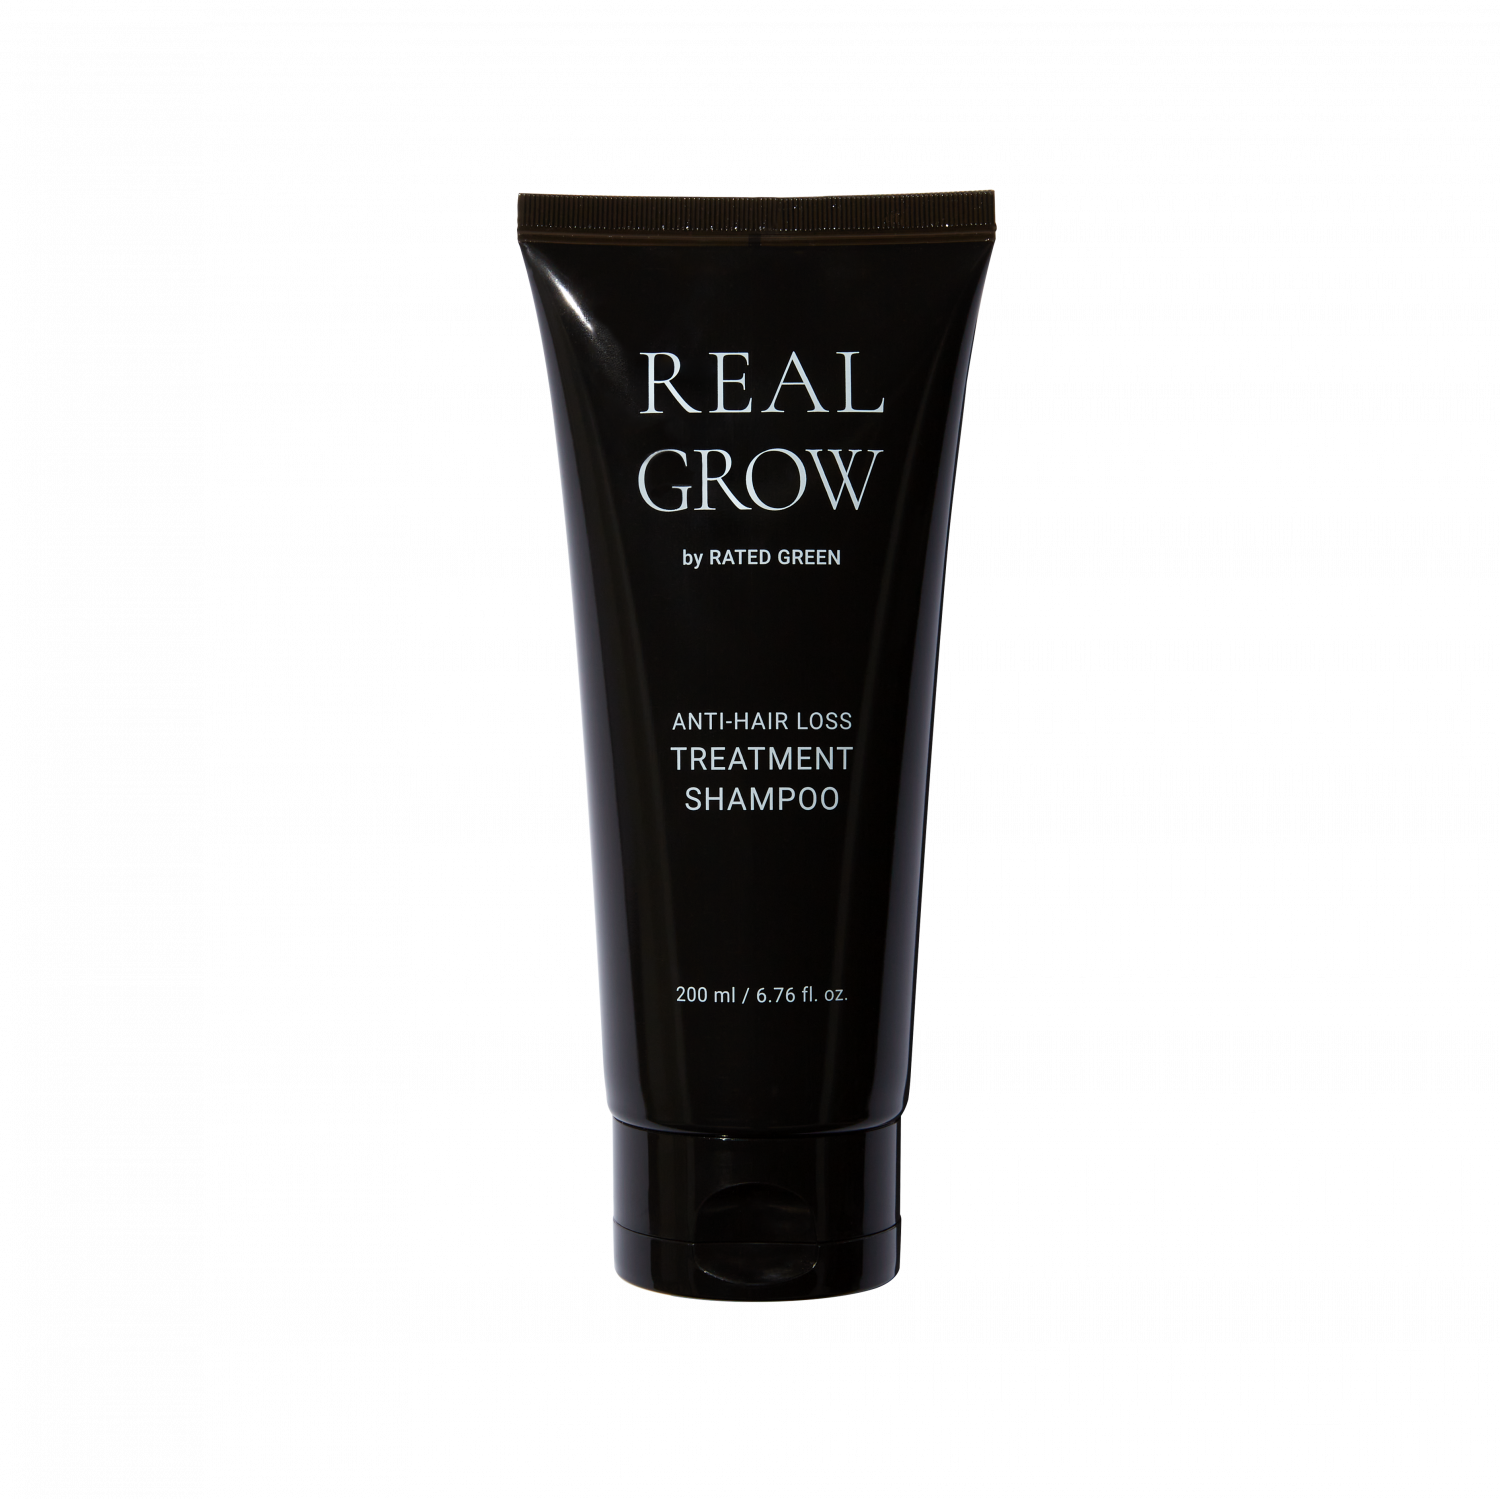 Rated Green Anti Hair Loss Treatment Shampoo 200ml - интернет-магазин профессиональной косметики Spadream, изображение 35331